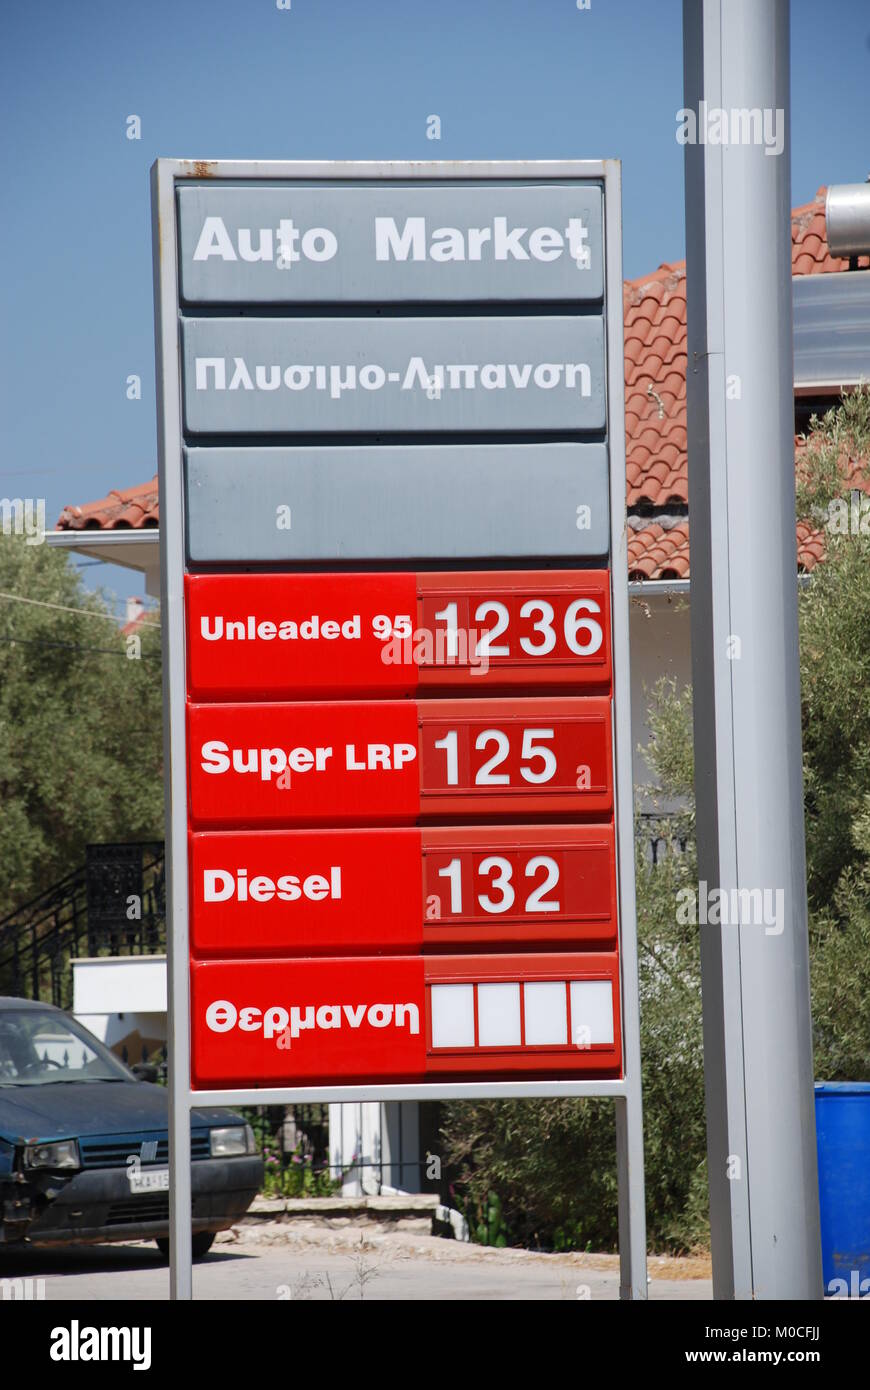 Signage outside an Avin petrol station at Spartohori on the Greek island of Meganissi on August 30, 2008. Stock Photo